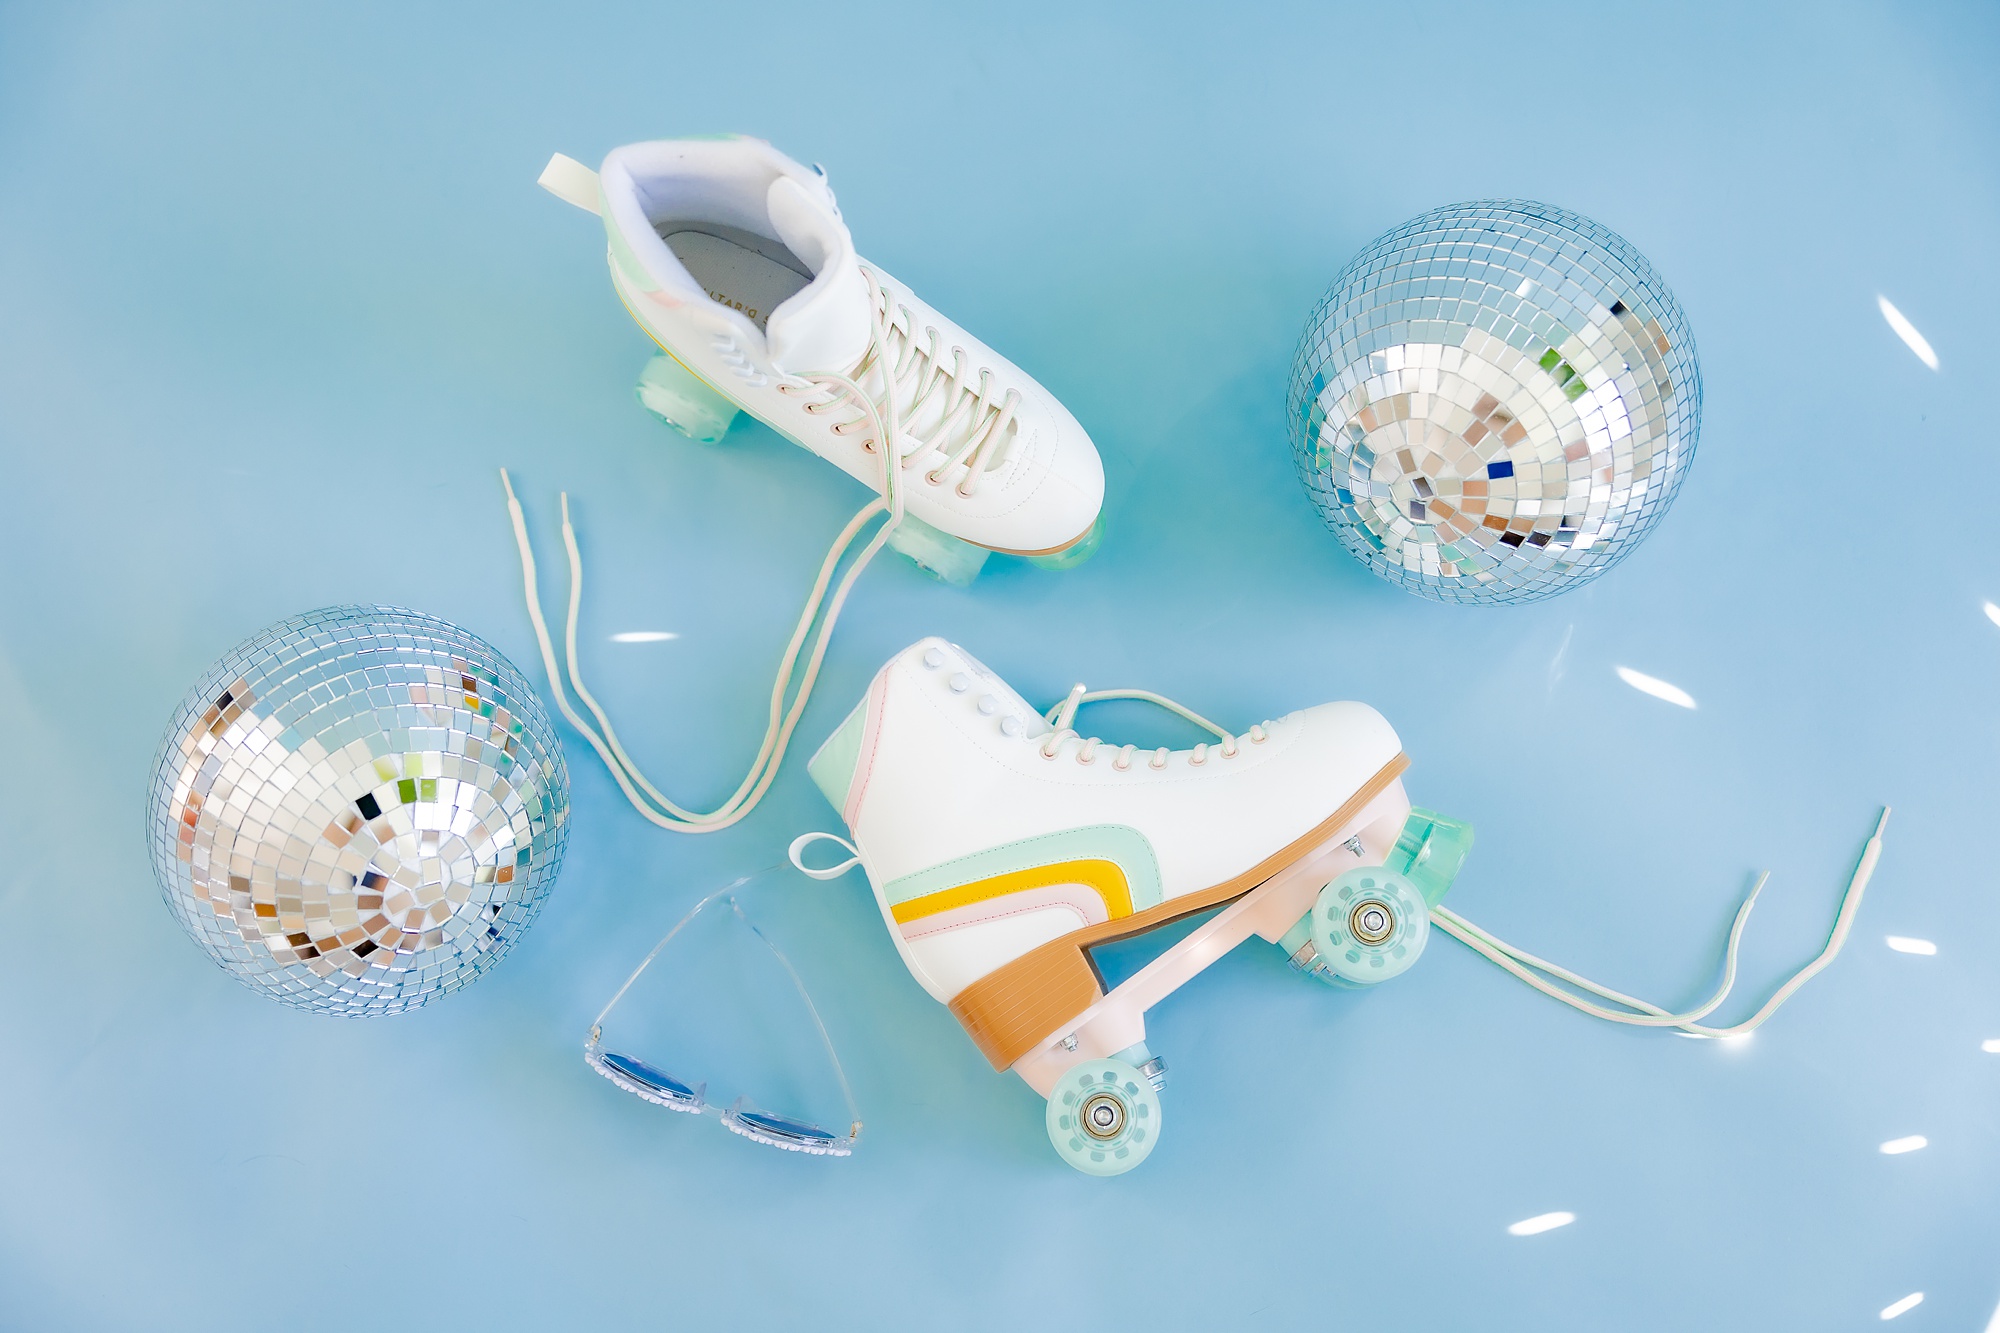 roller skates and disco balls for playful branding portraits